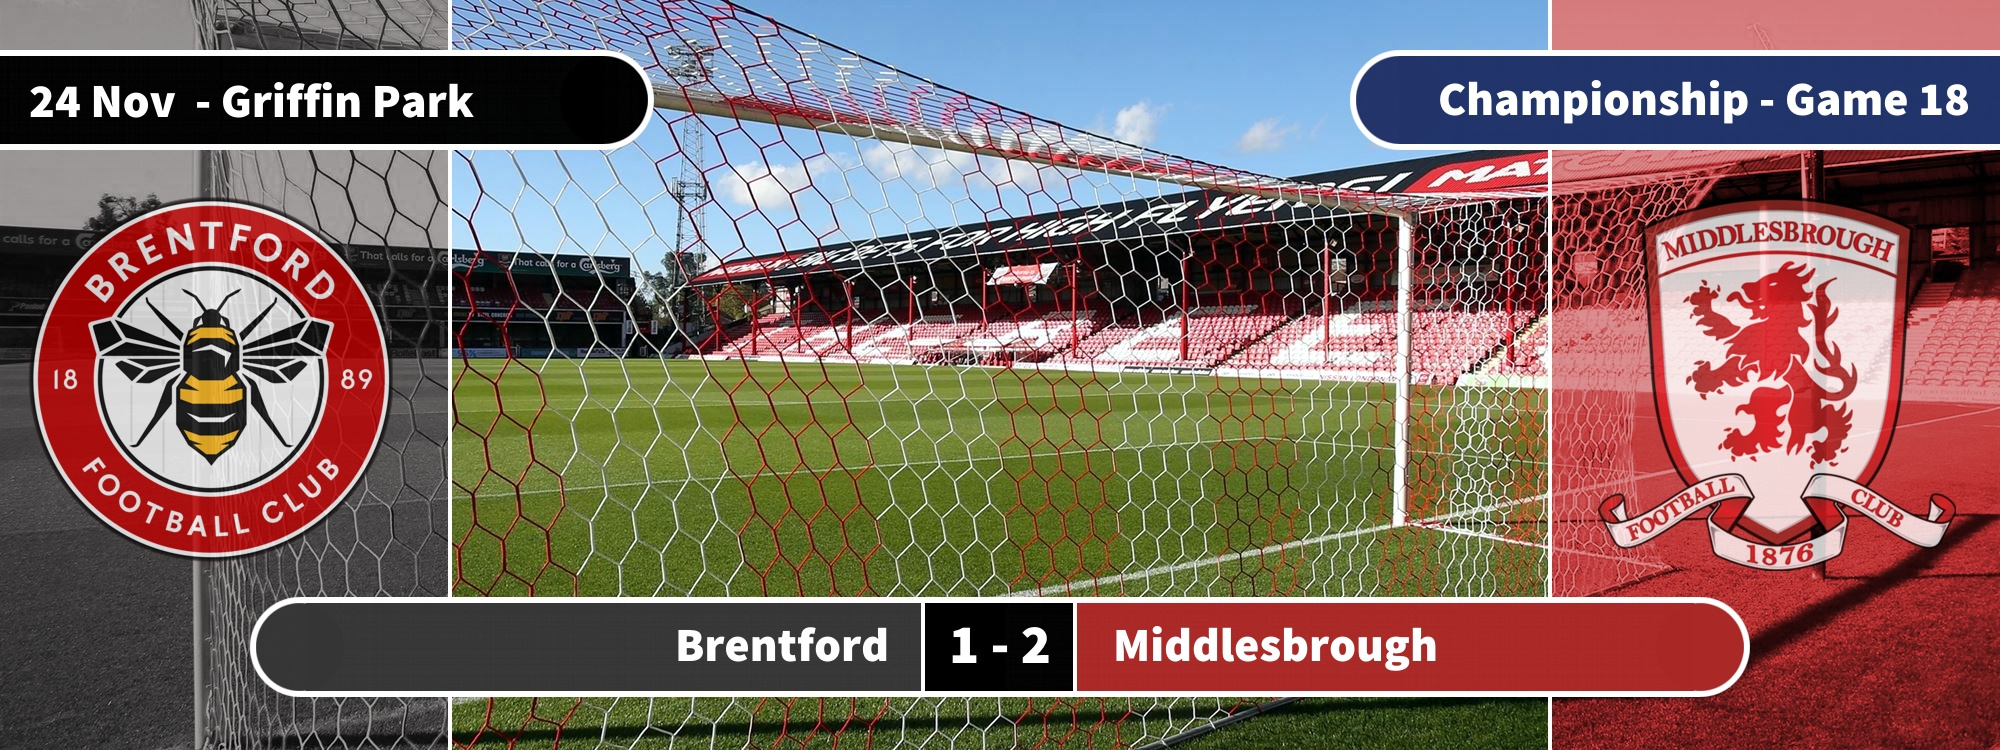 Match Graphic - Brentford A